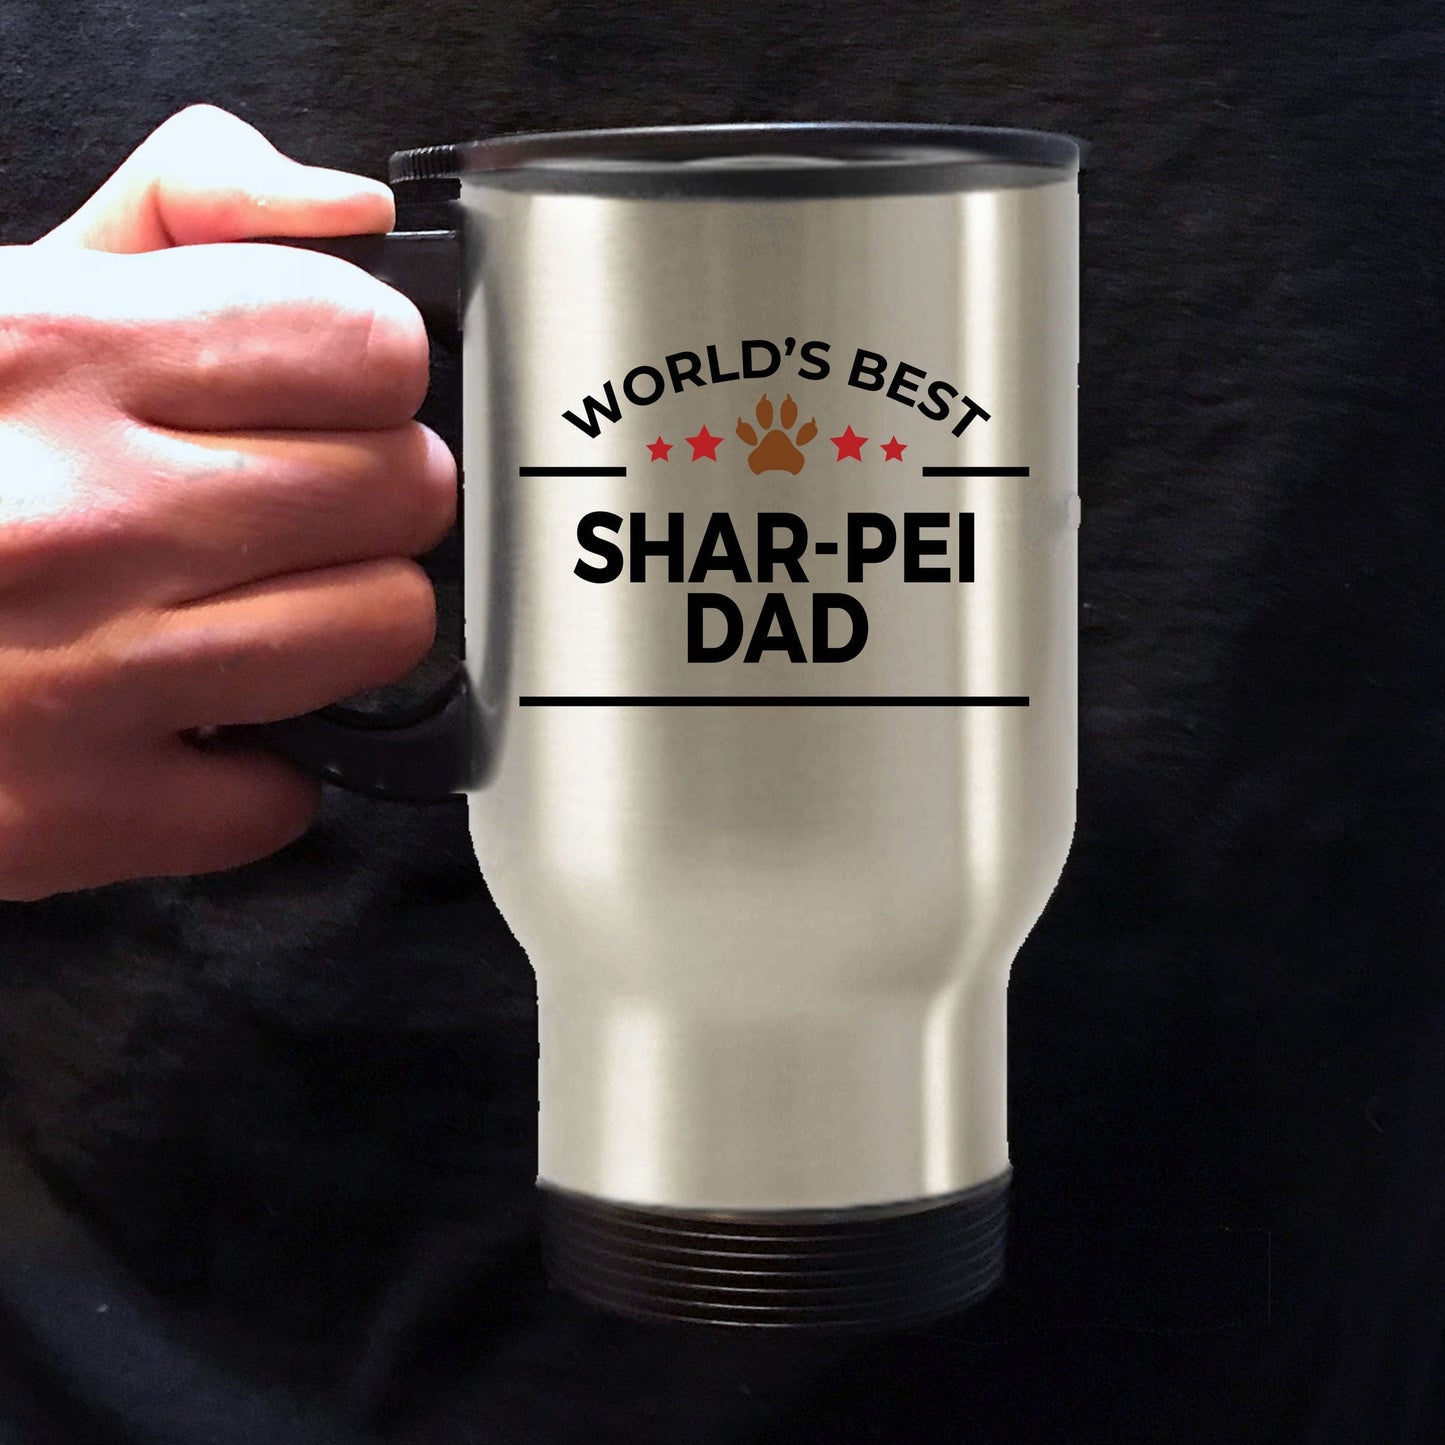 Shar-Pei Dog Dad Travel Coffee Mug